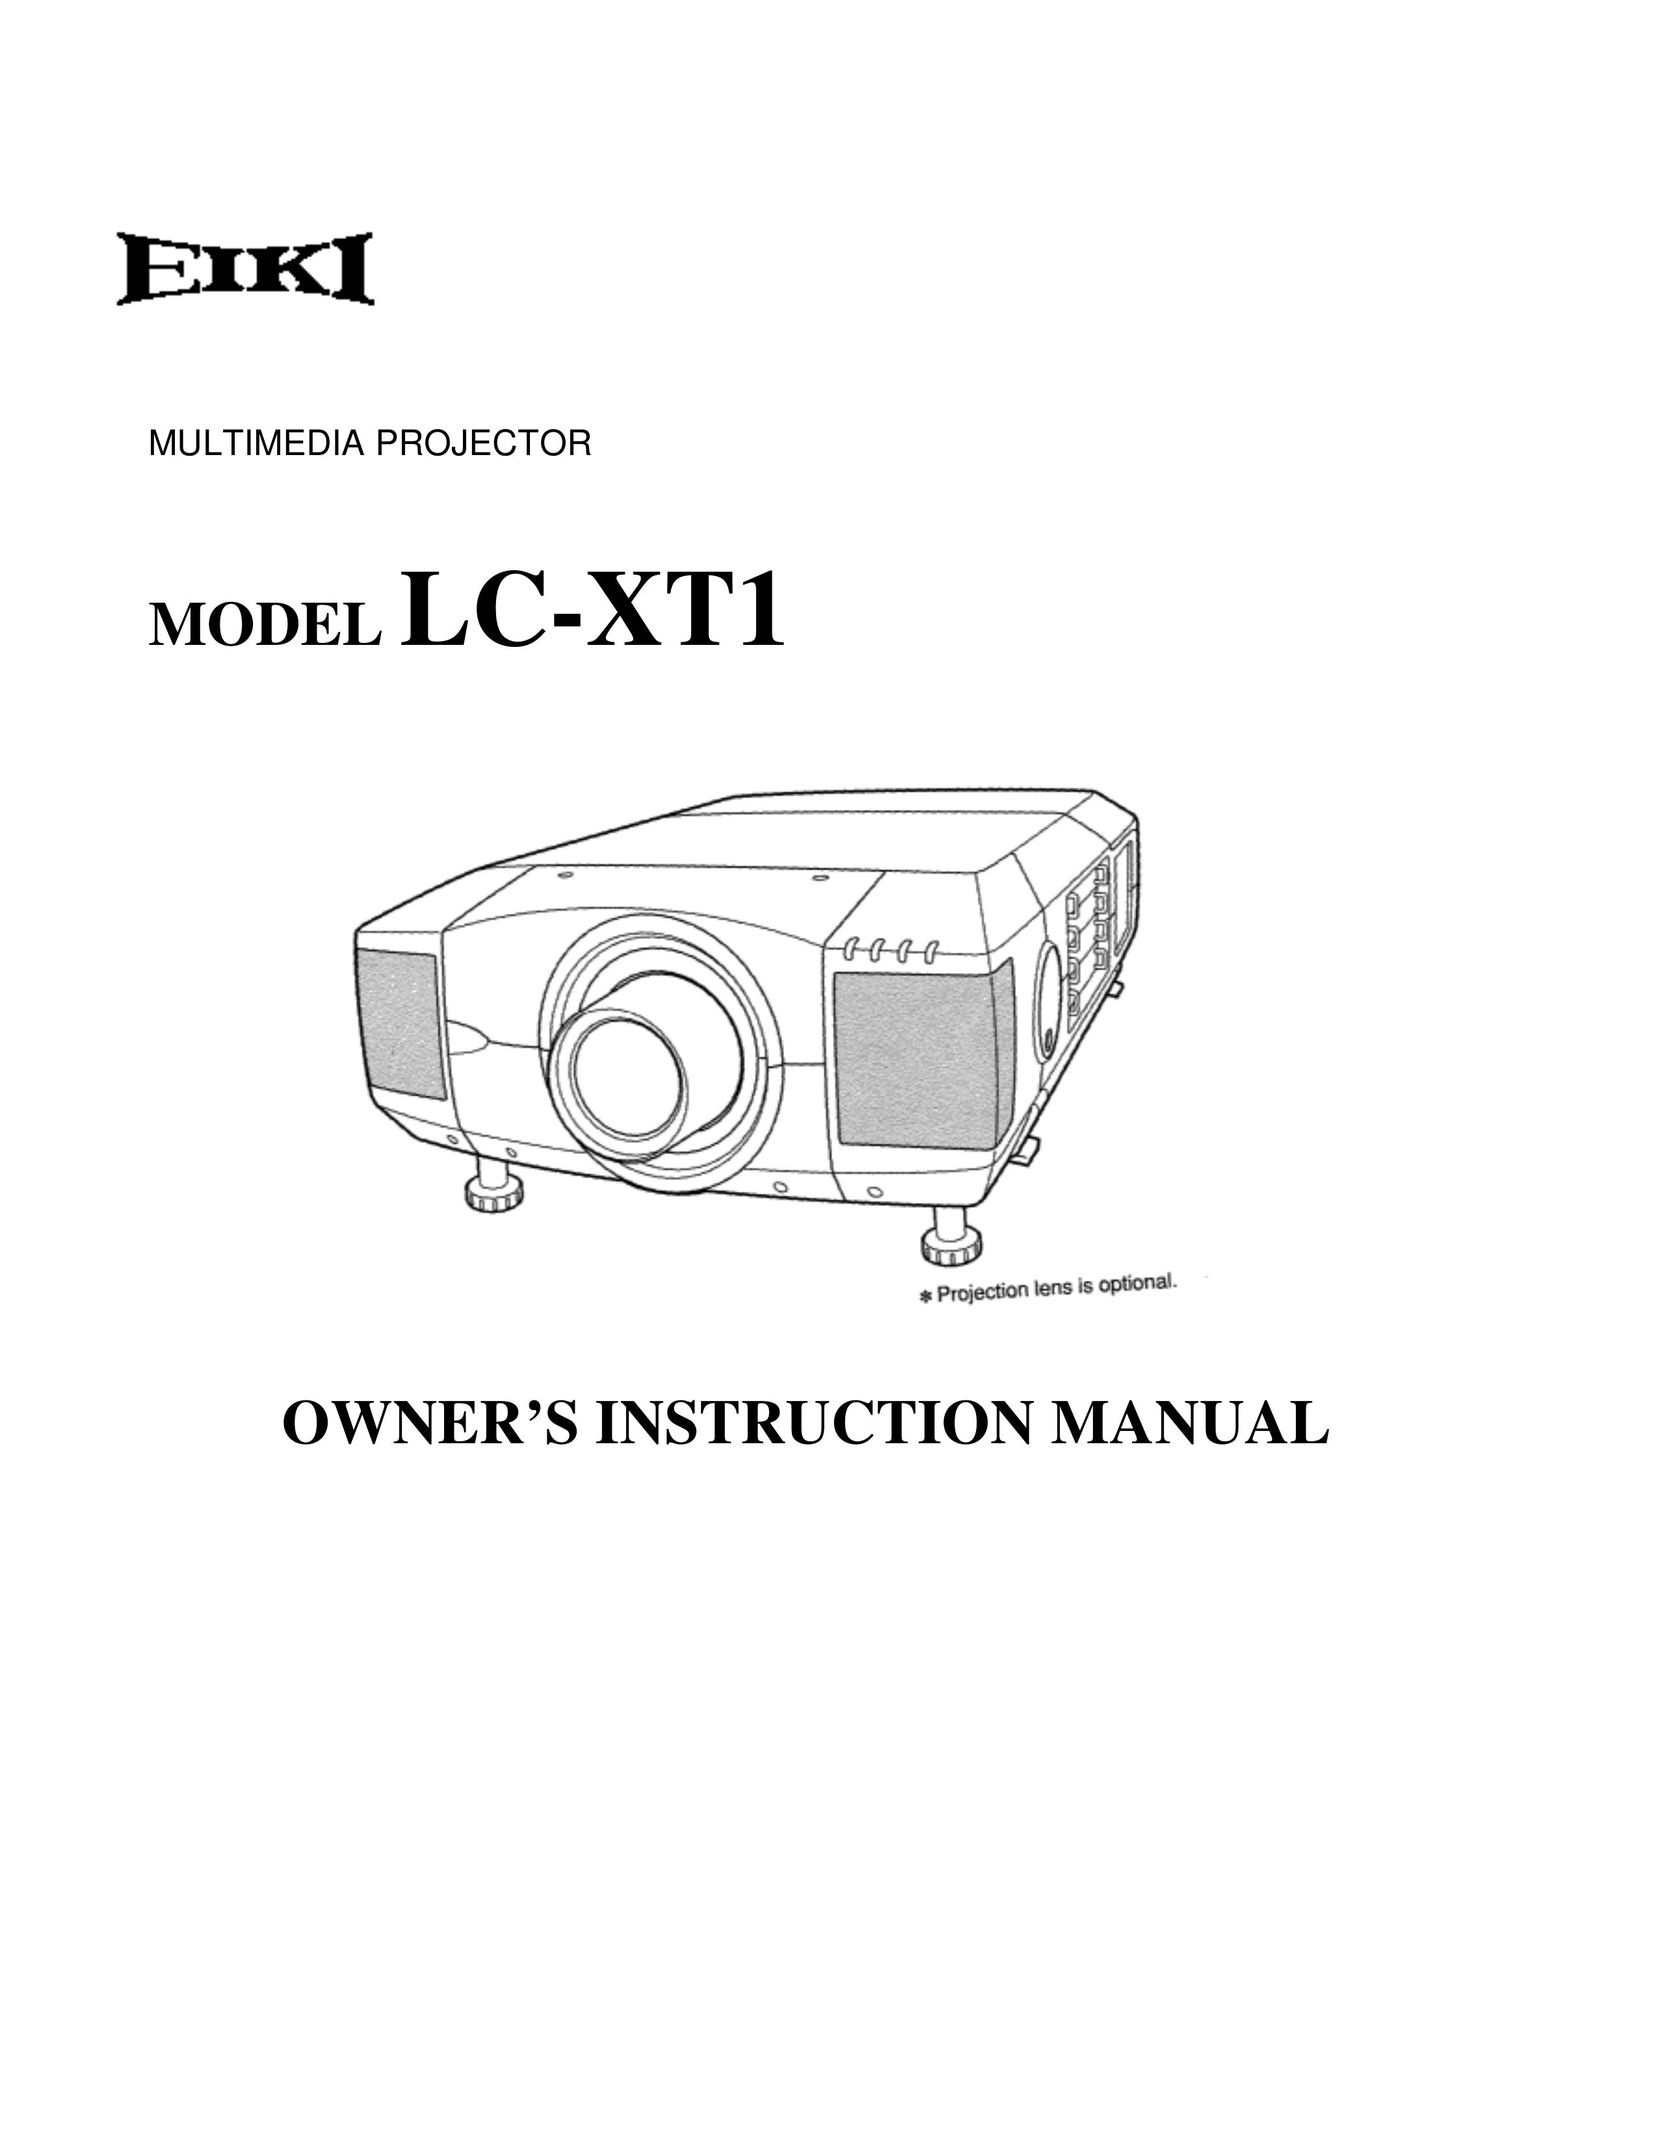 Eiki LC-XT1 CRT Television User Manual